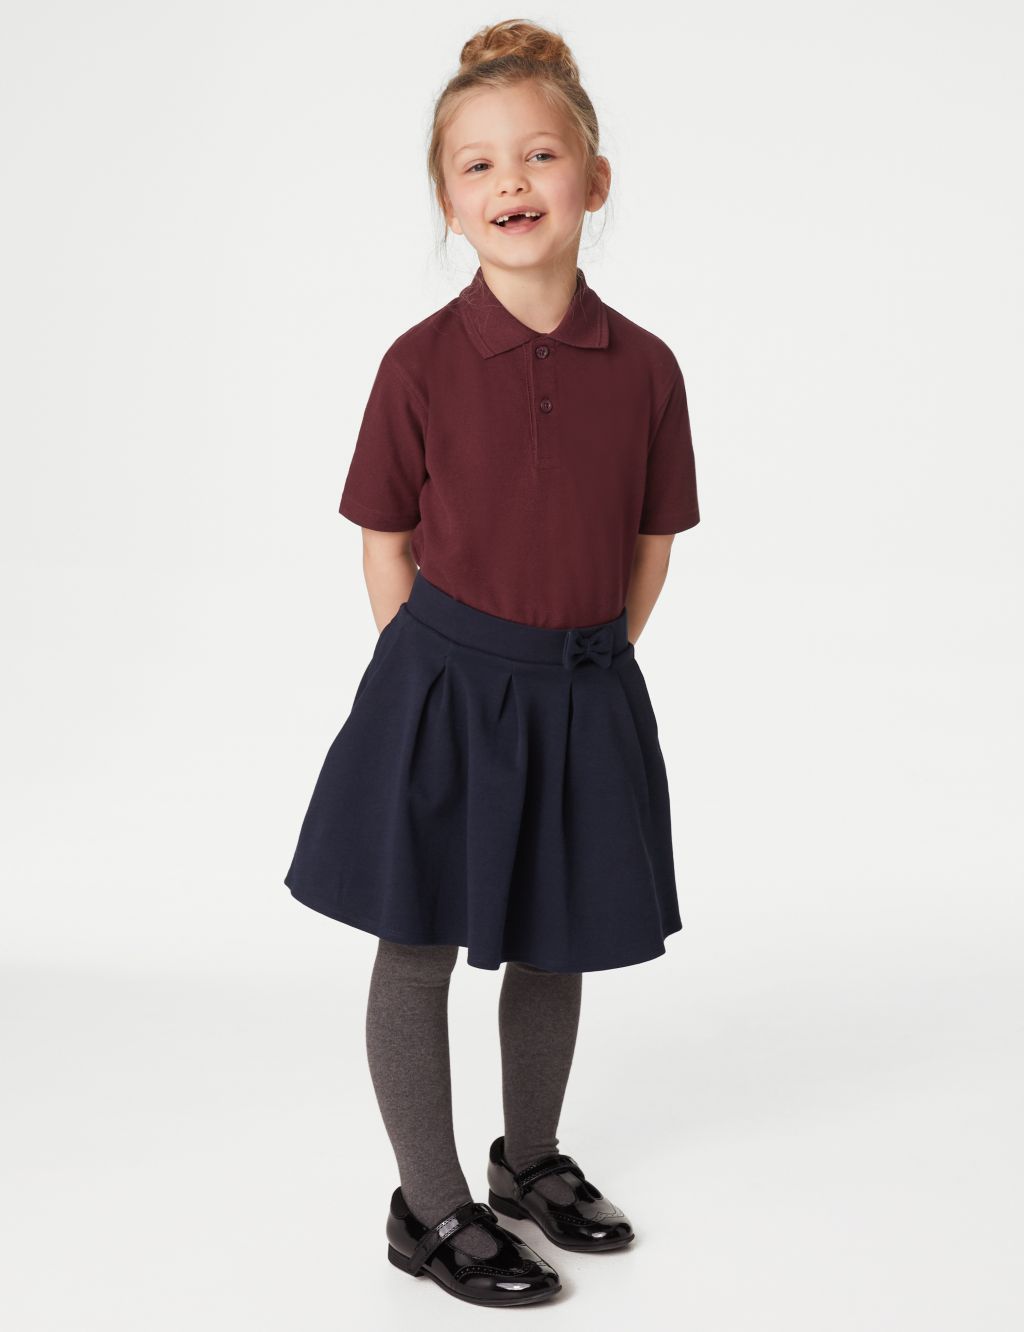 Unisex Pure Cotton School Polo Shirt (2-18 Yrs) image 4